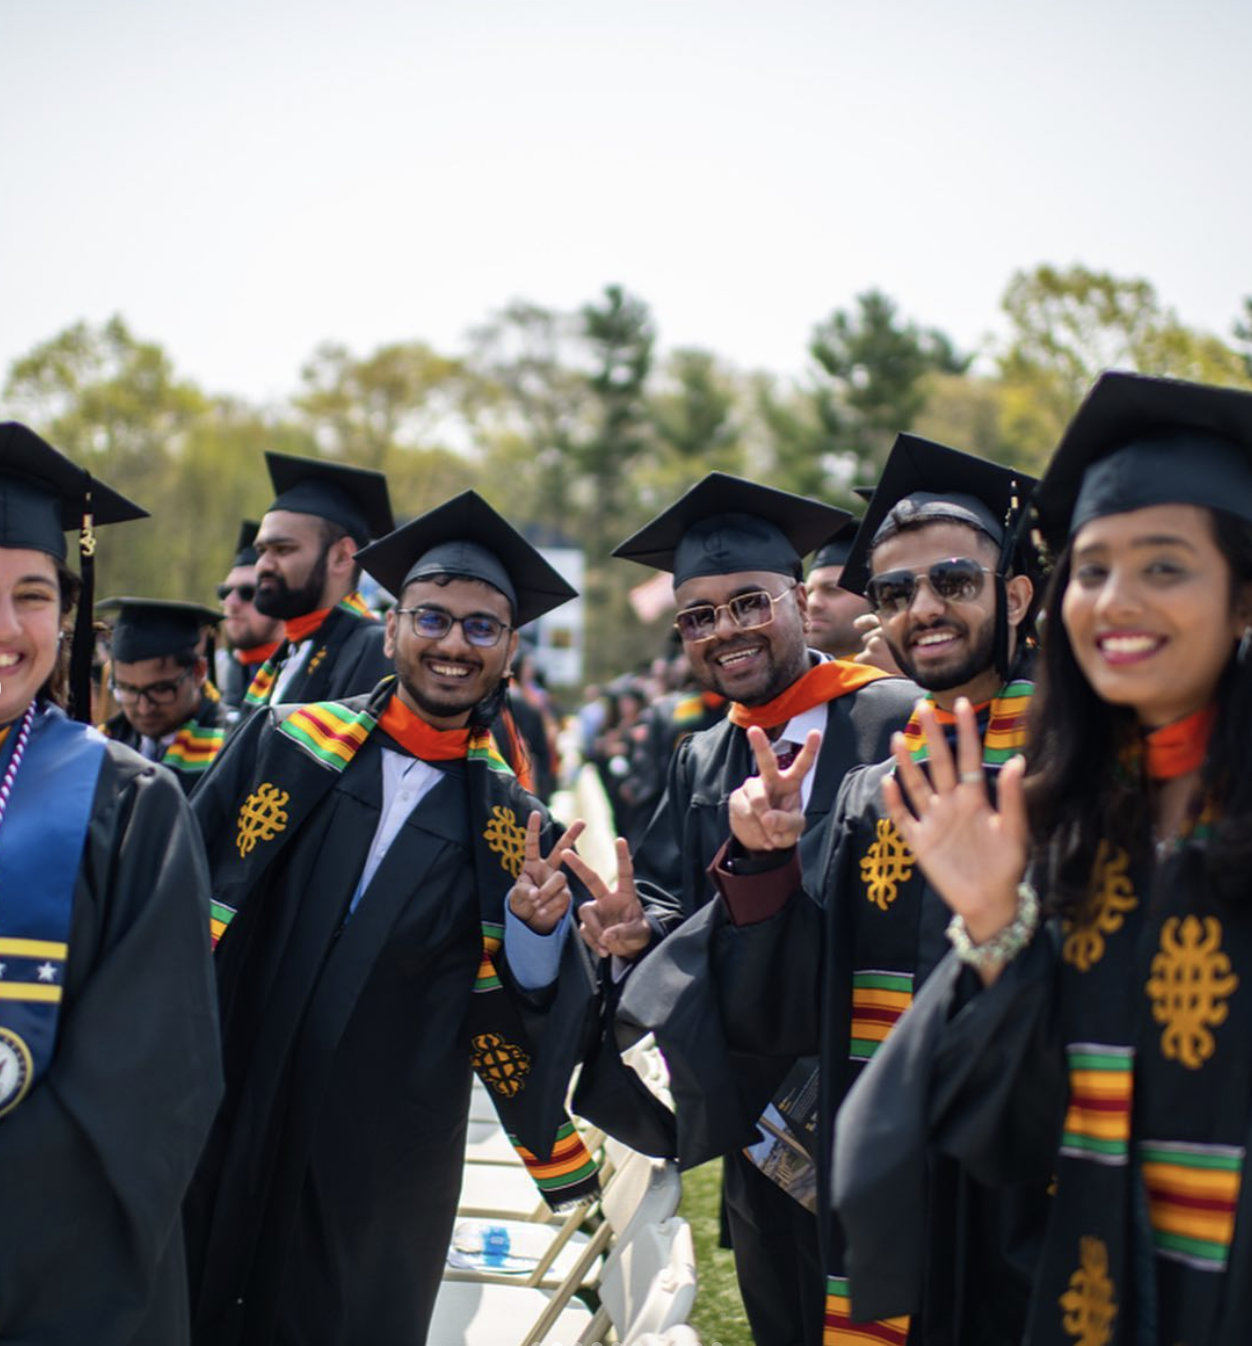 2023 UMass Dartmouth graduates smiling at commencement.